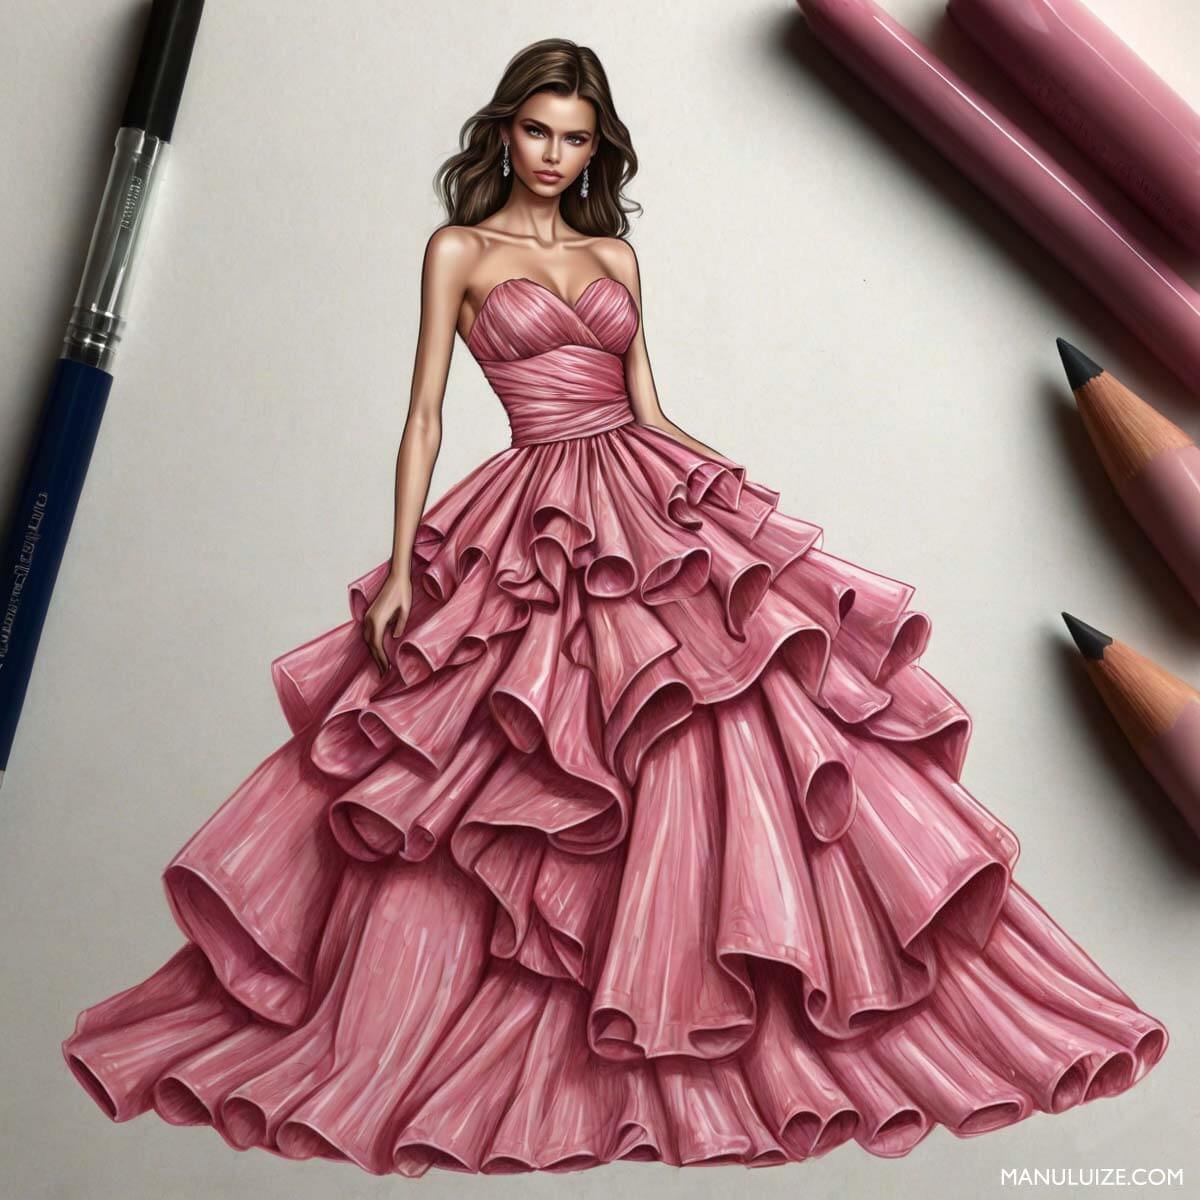 Croqui de moda: Vestido de alta costura rosa